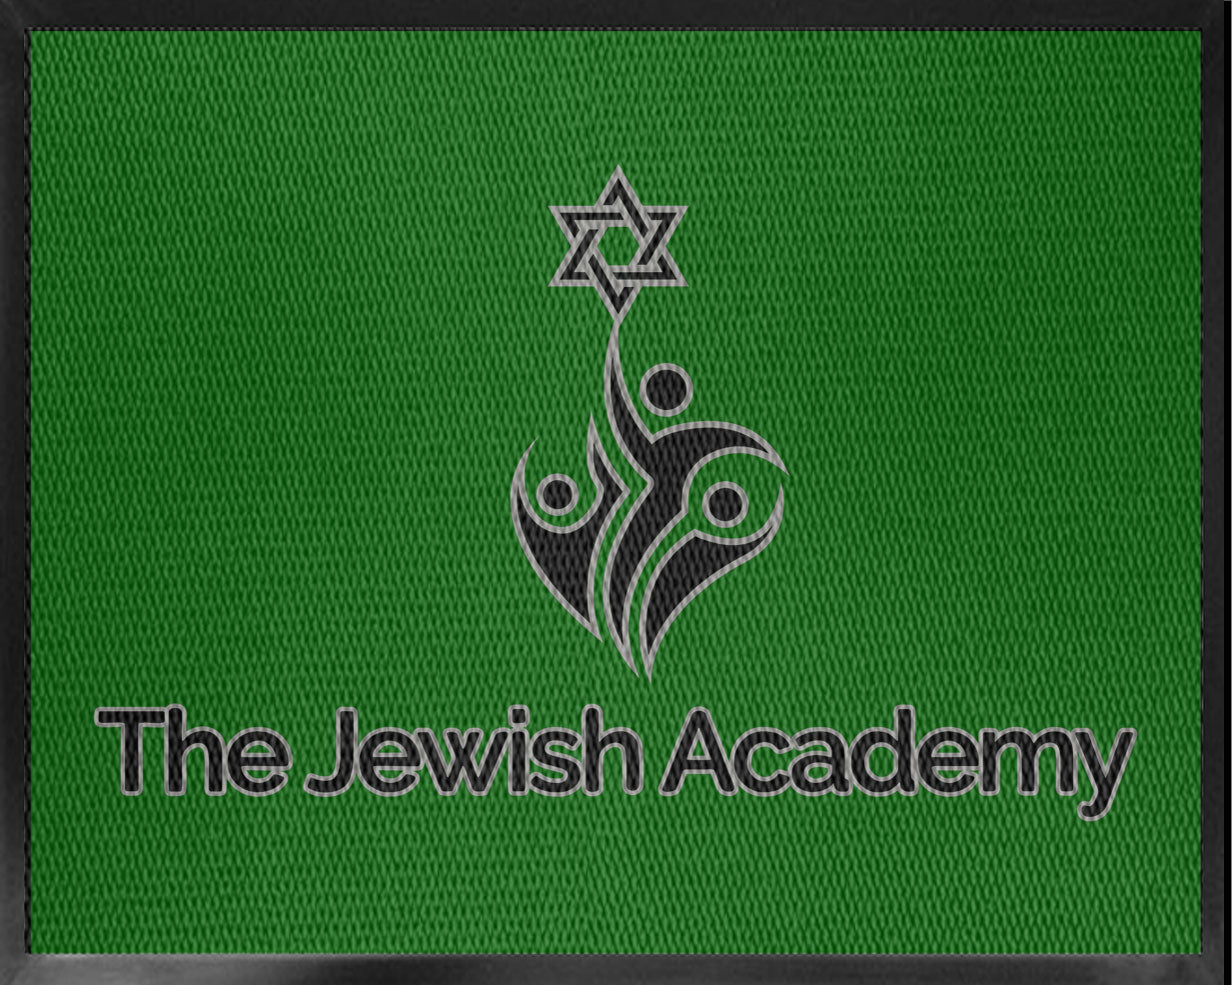 THE JEWISH ACADEMY LOGO MASTERS §